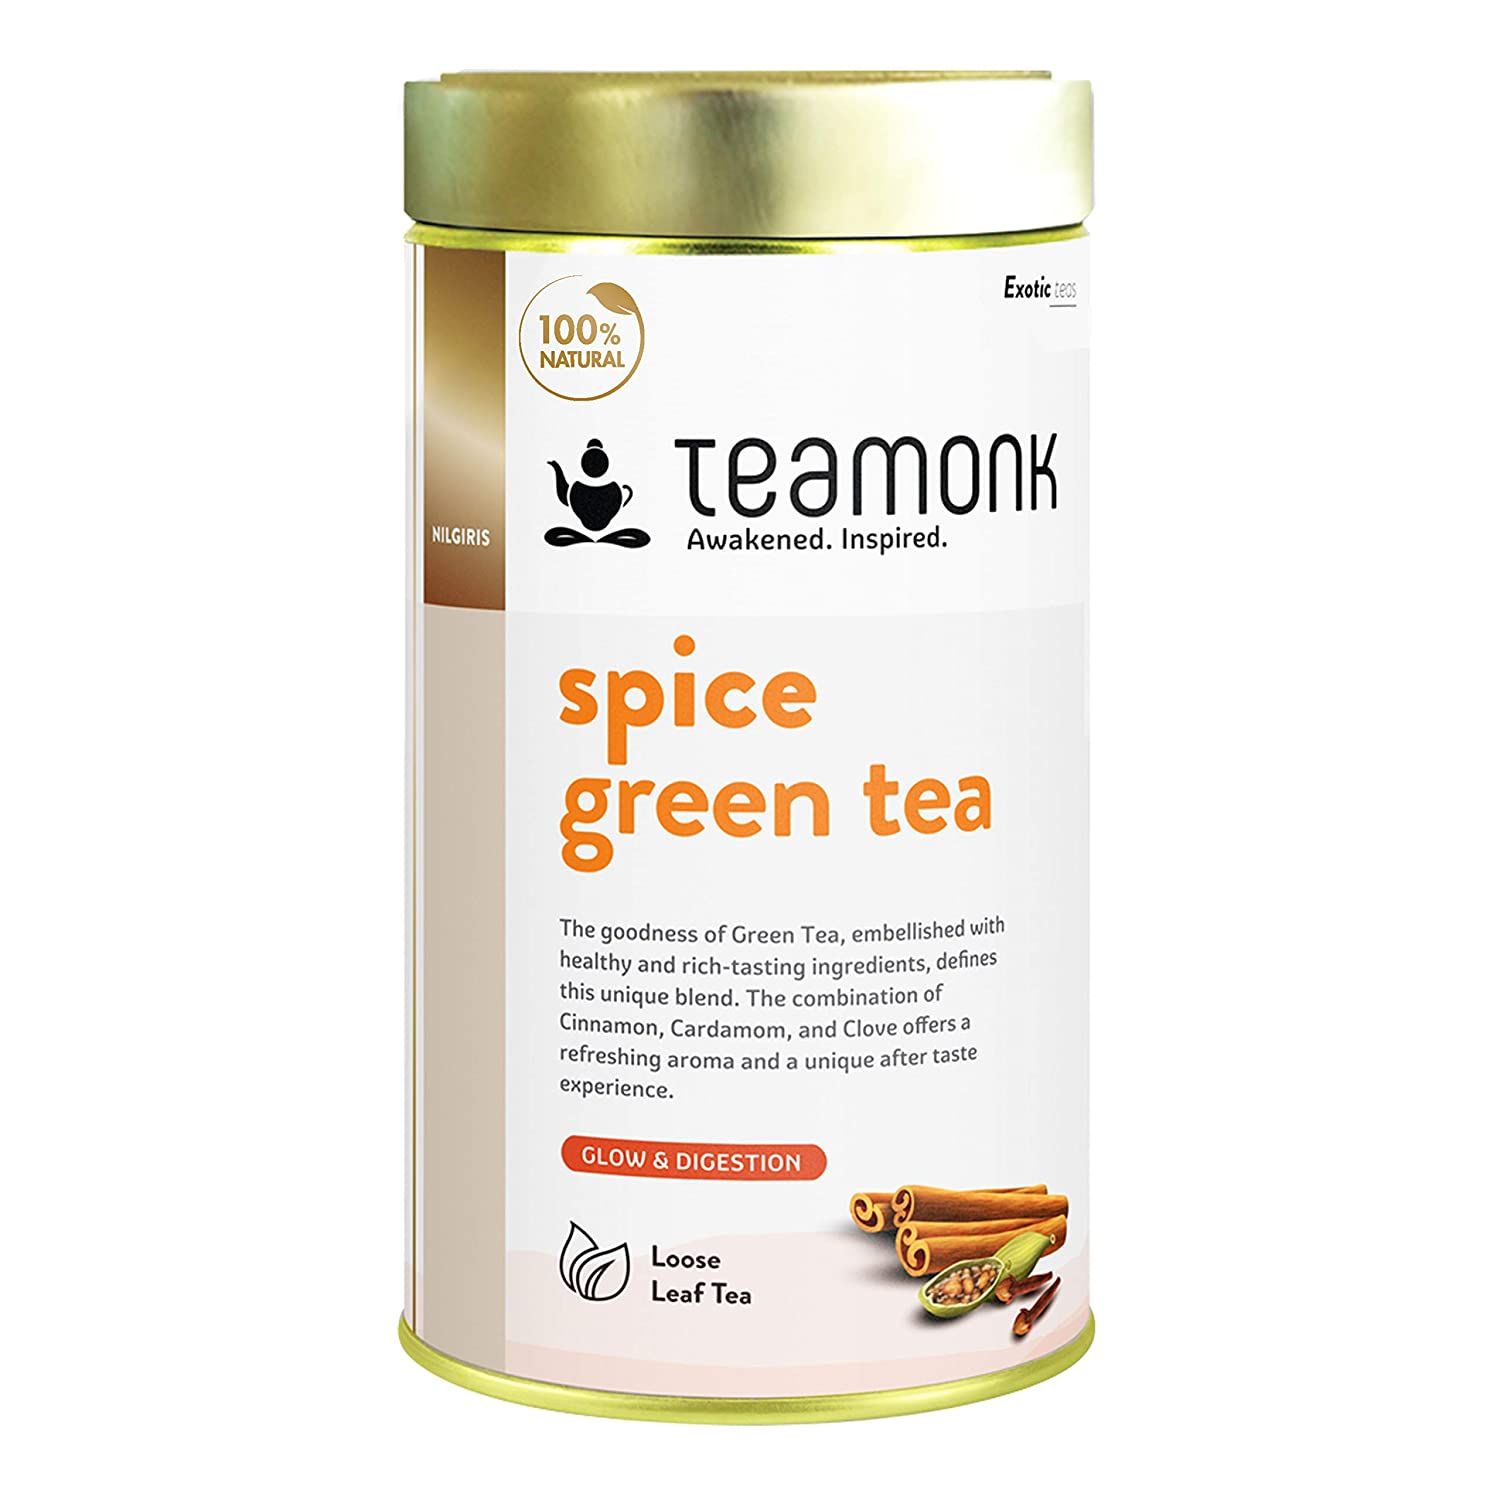 Teamonk Spice Green Tea Image